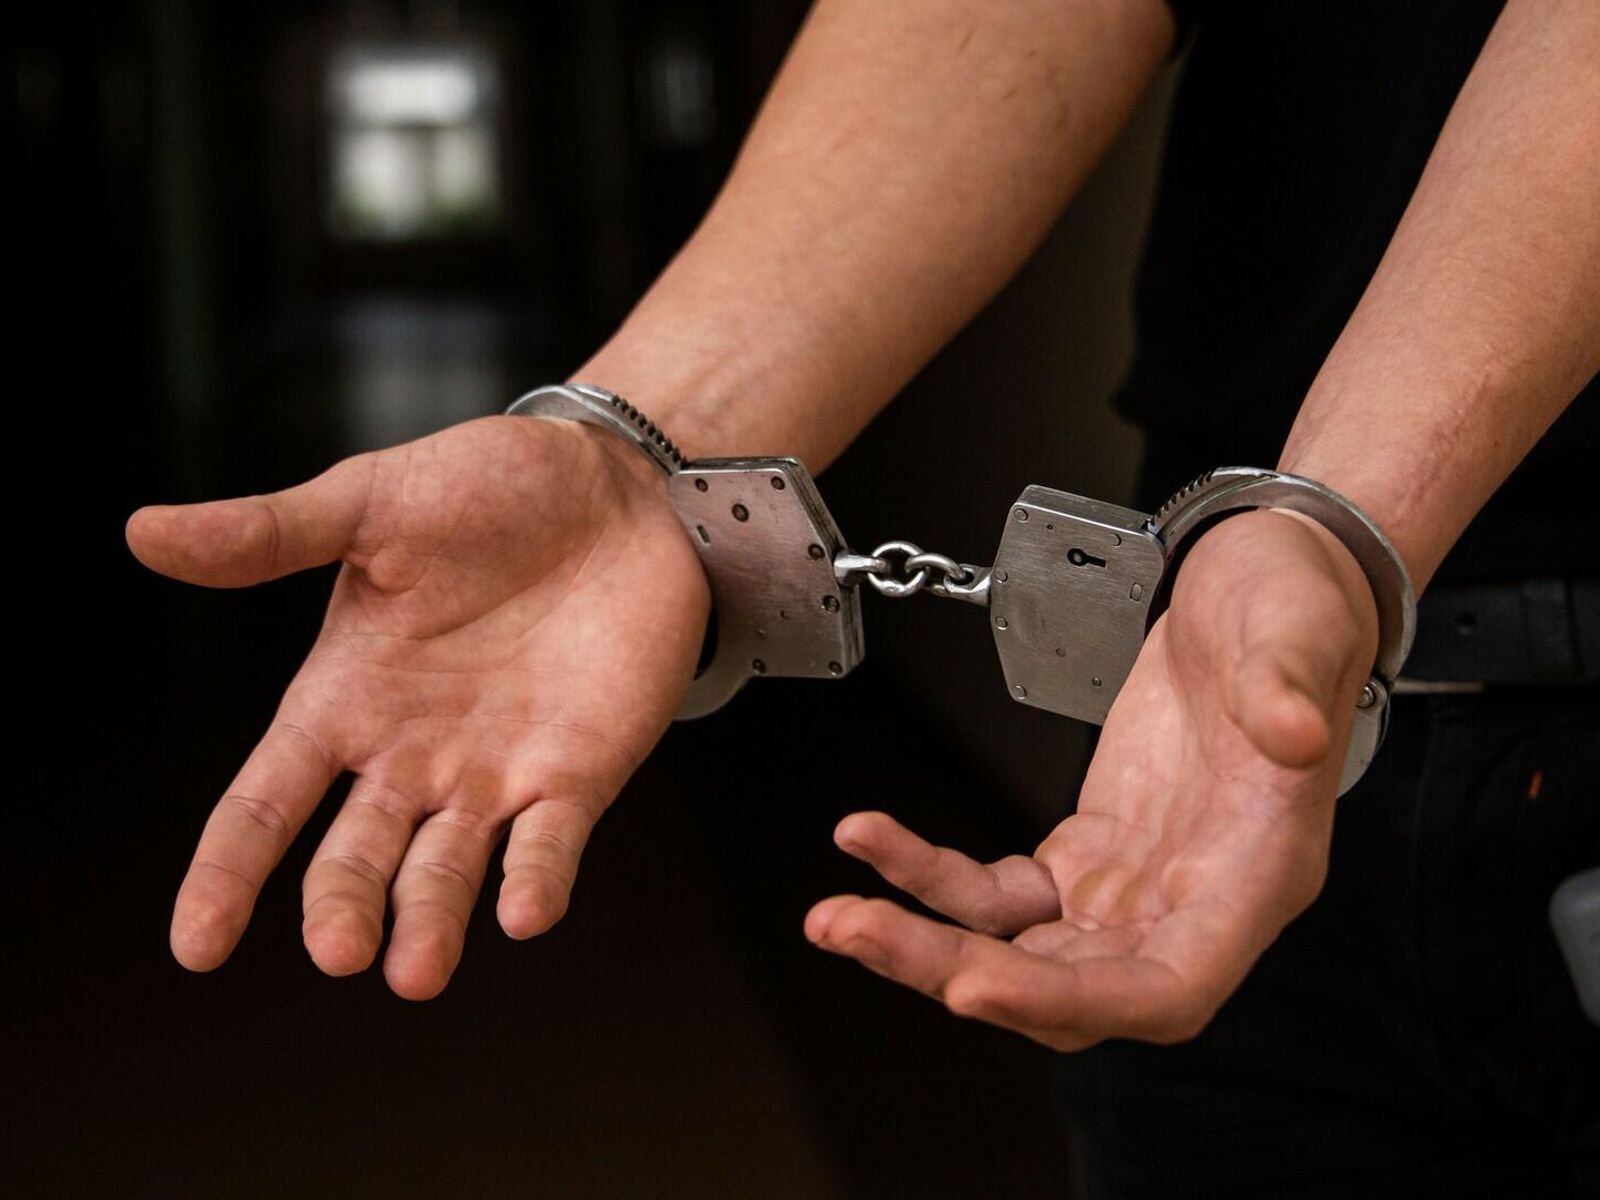 Handcuffs in hands